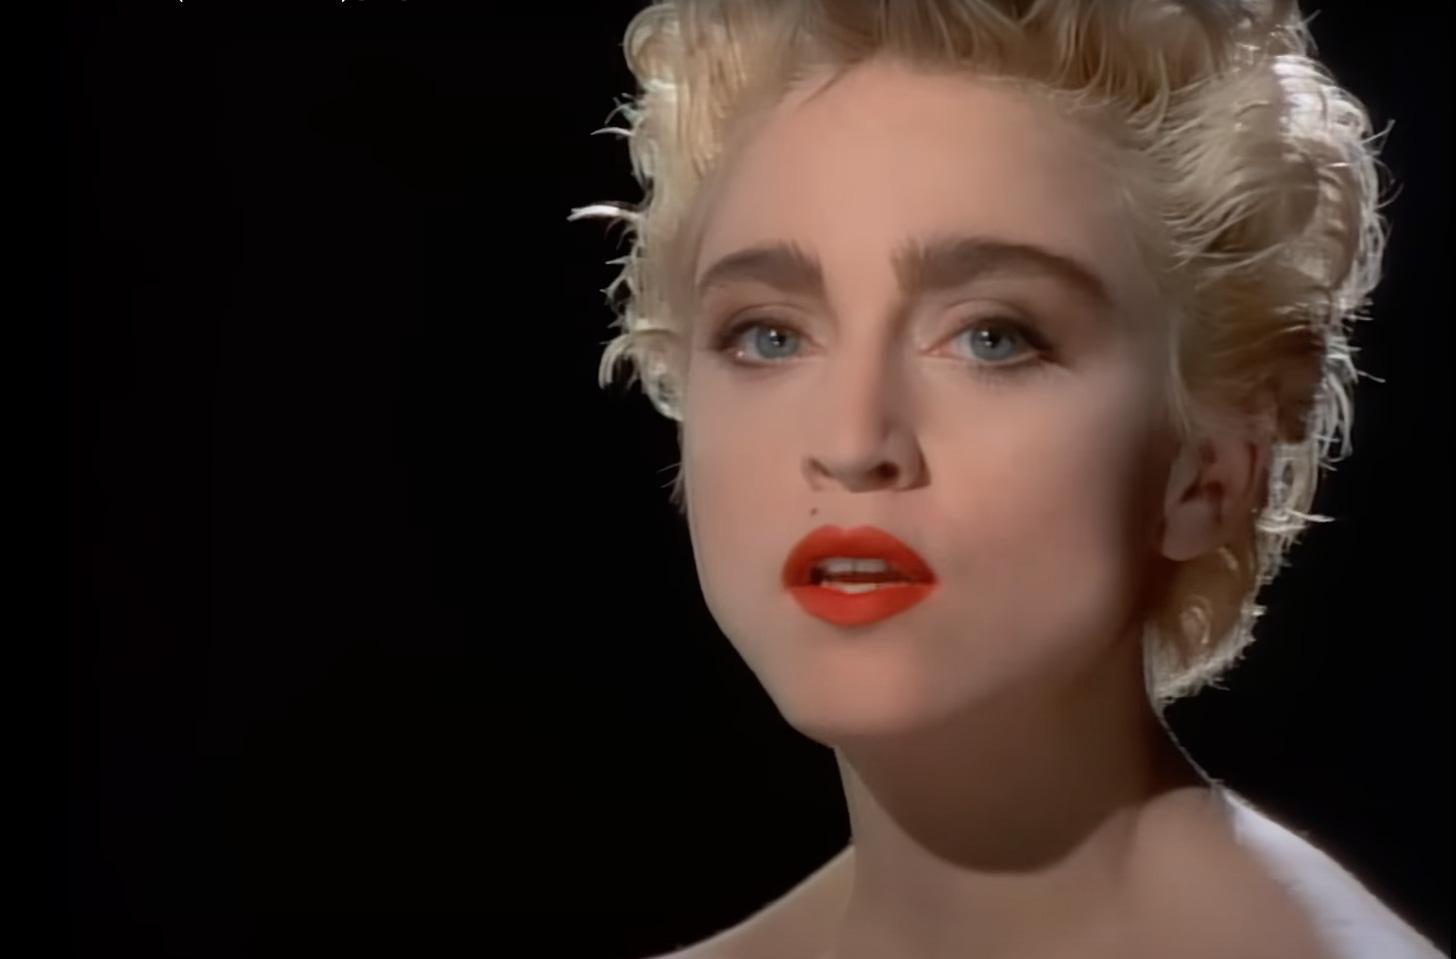 Screenshot of Madonna in the video, closeup.